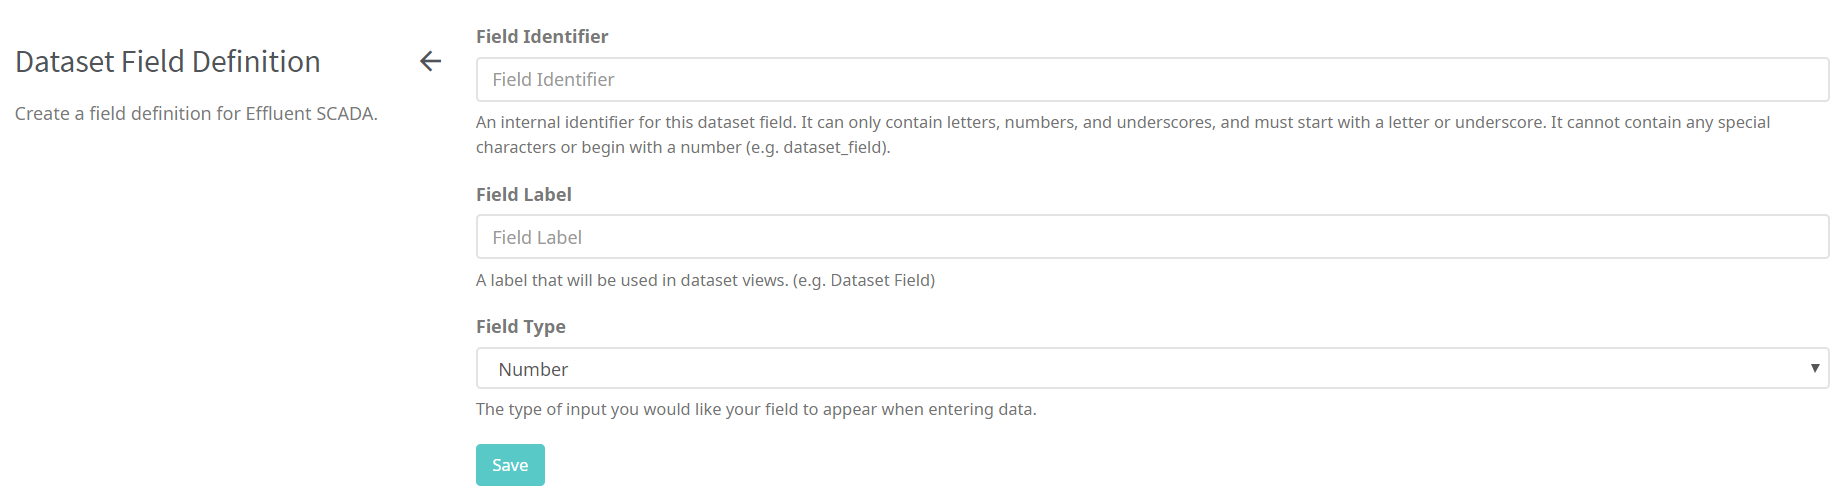 dataset_field_definition.PNG